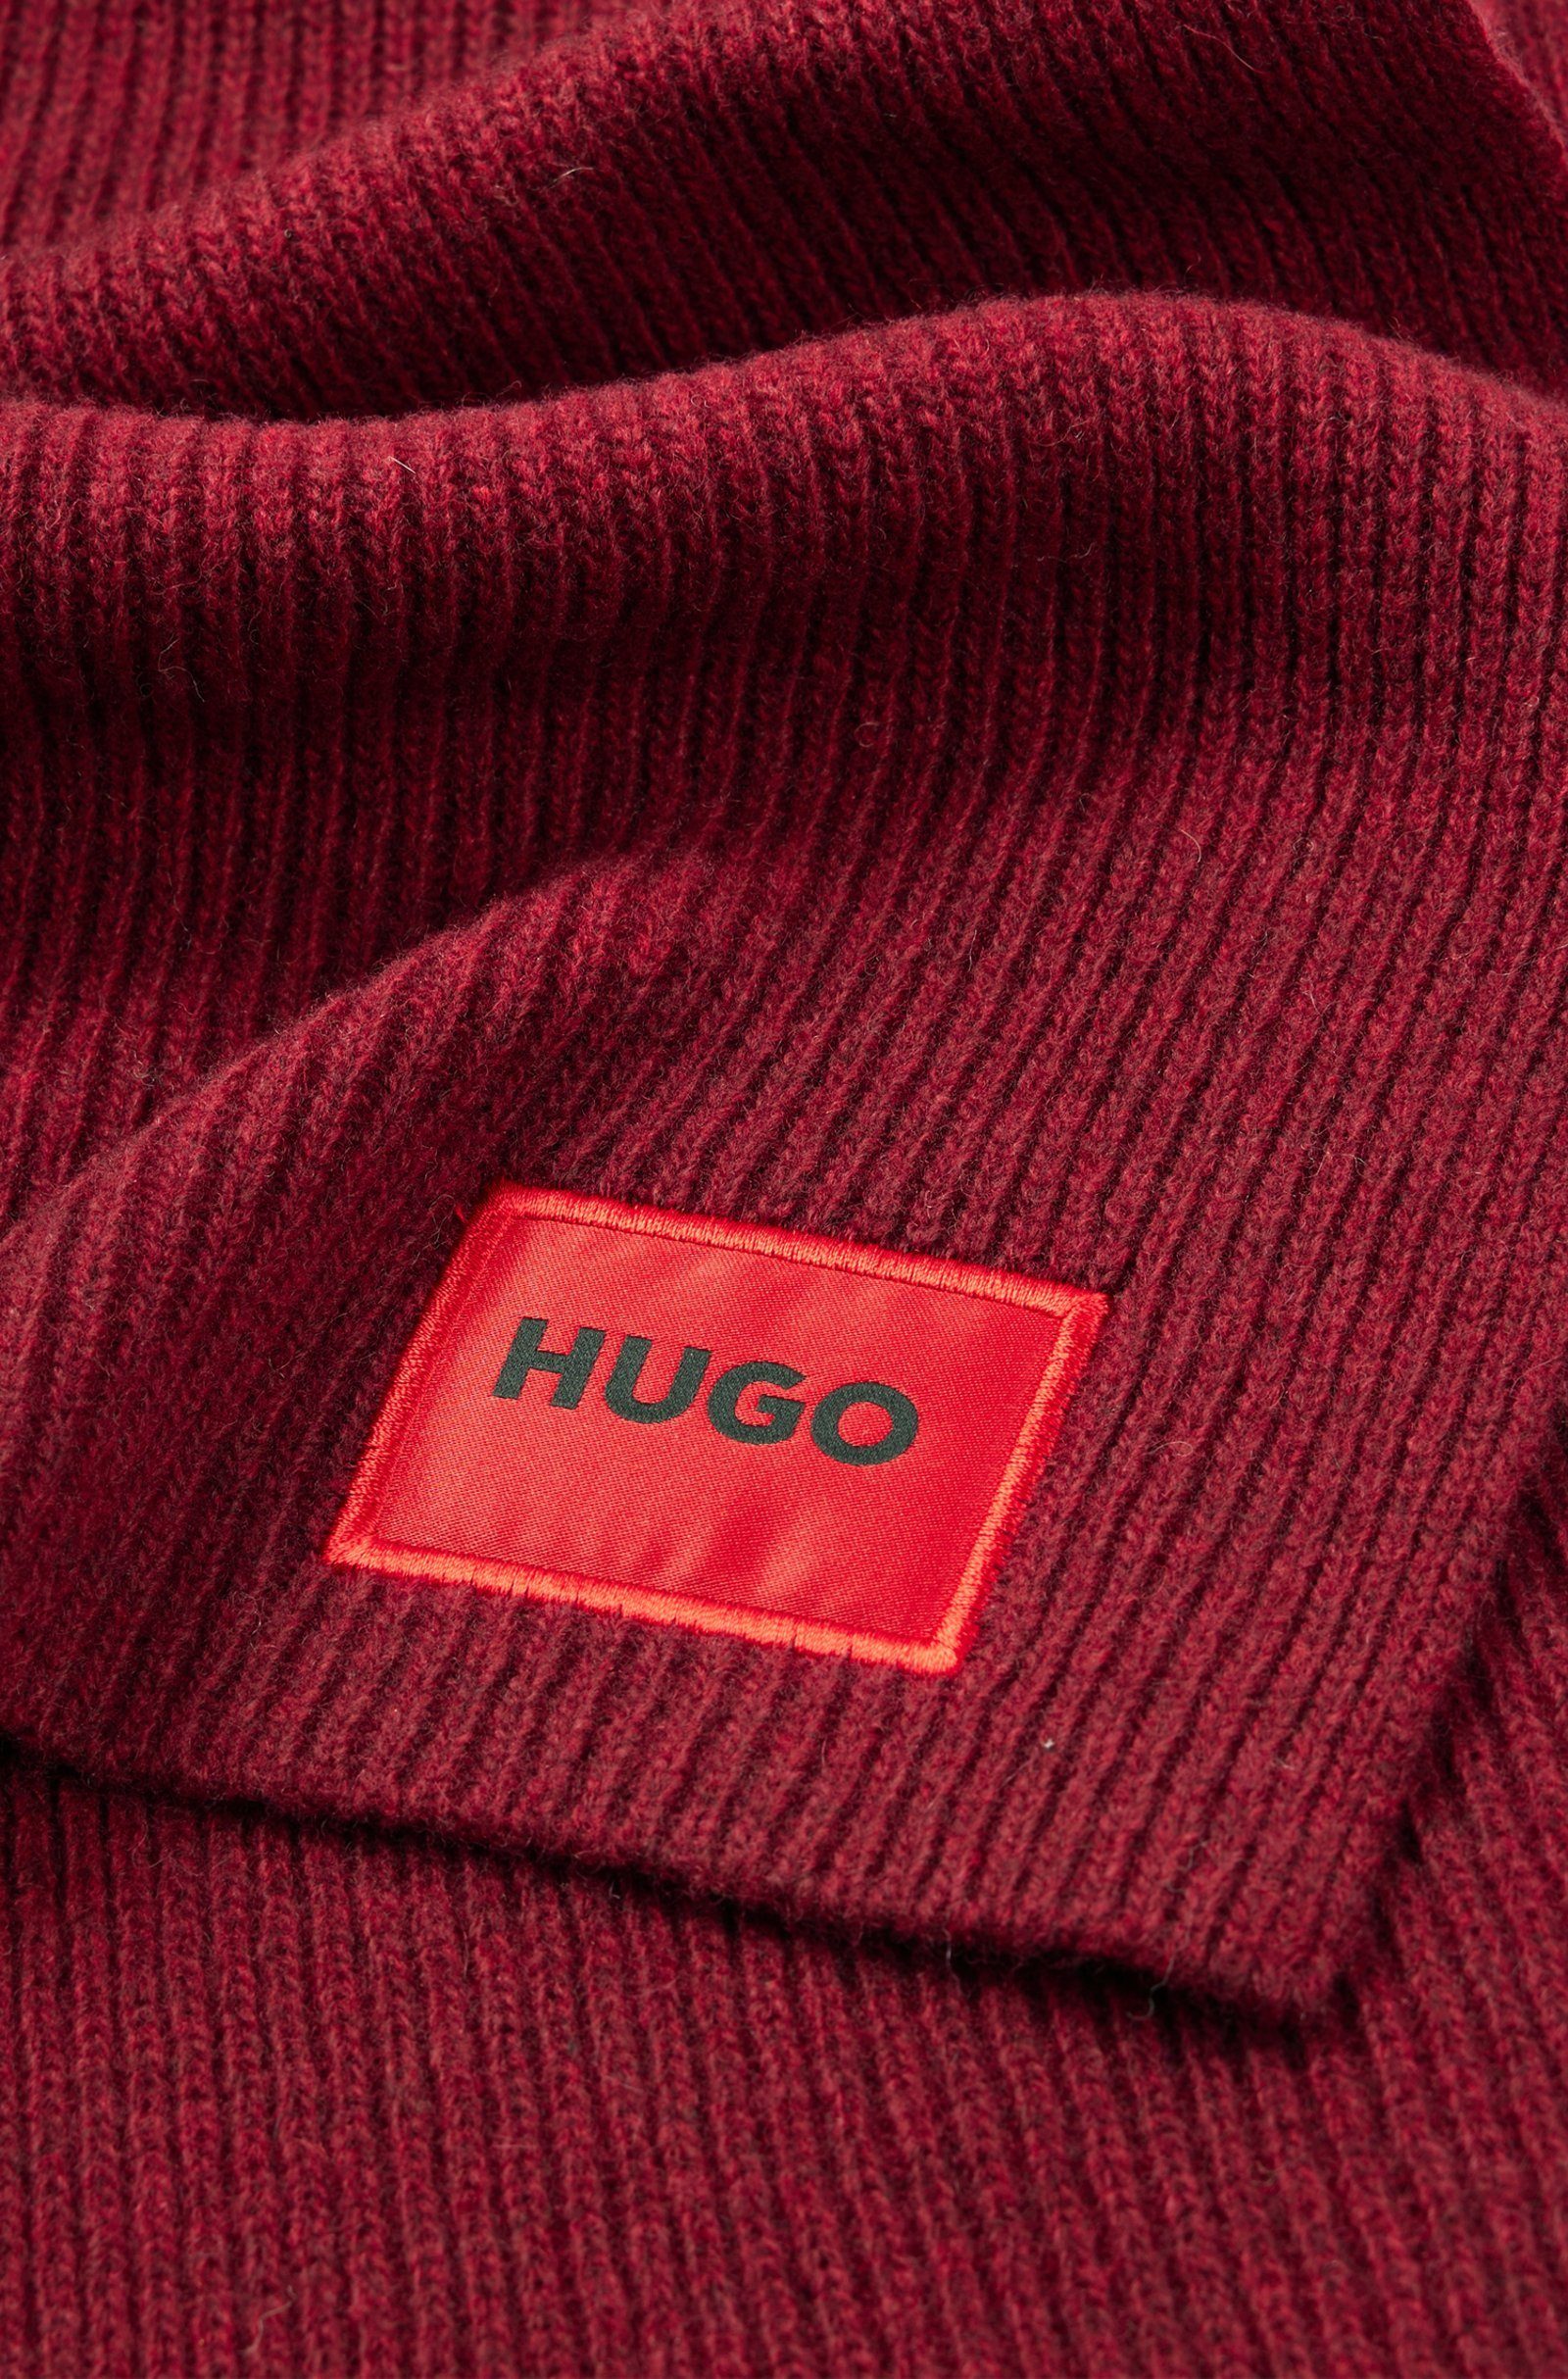 (604) HUGO (keine Angabe) keine Schal Angabe, Rot Zaff,